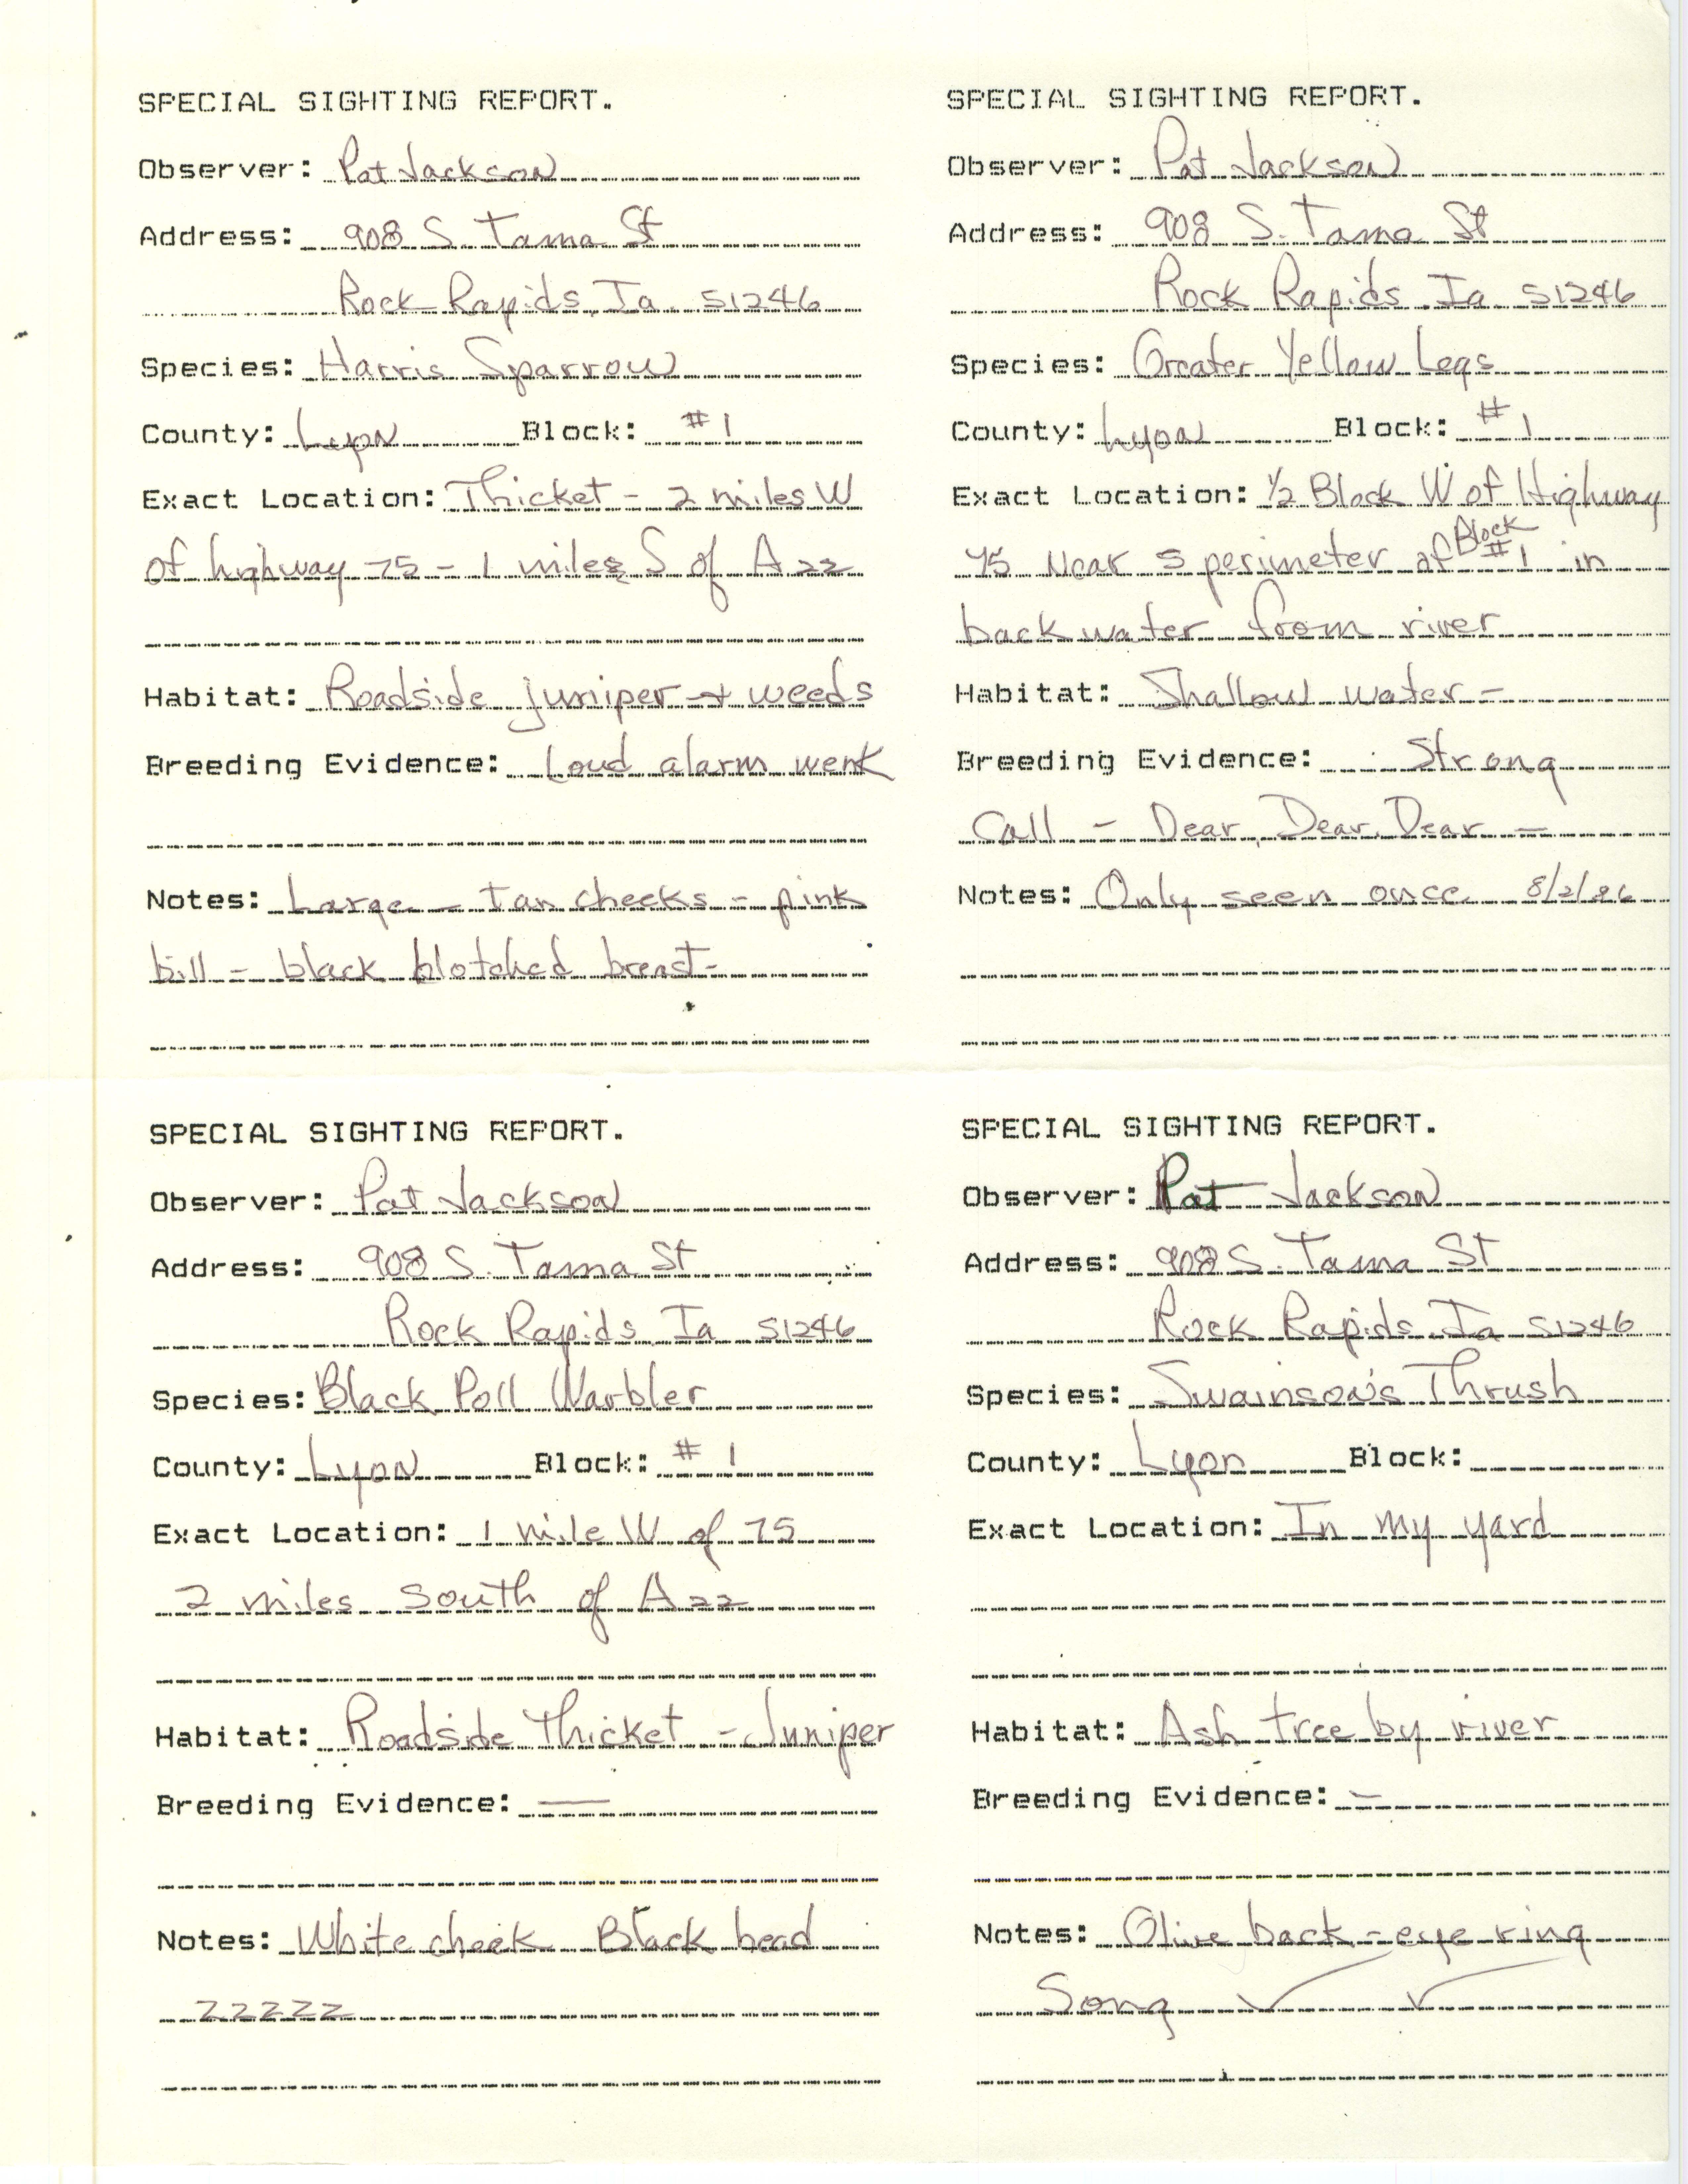 Special sighting reports and Iowa Breeding Bird Atlas documentation form, Patricia A. Jackson, August 20, 1986.